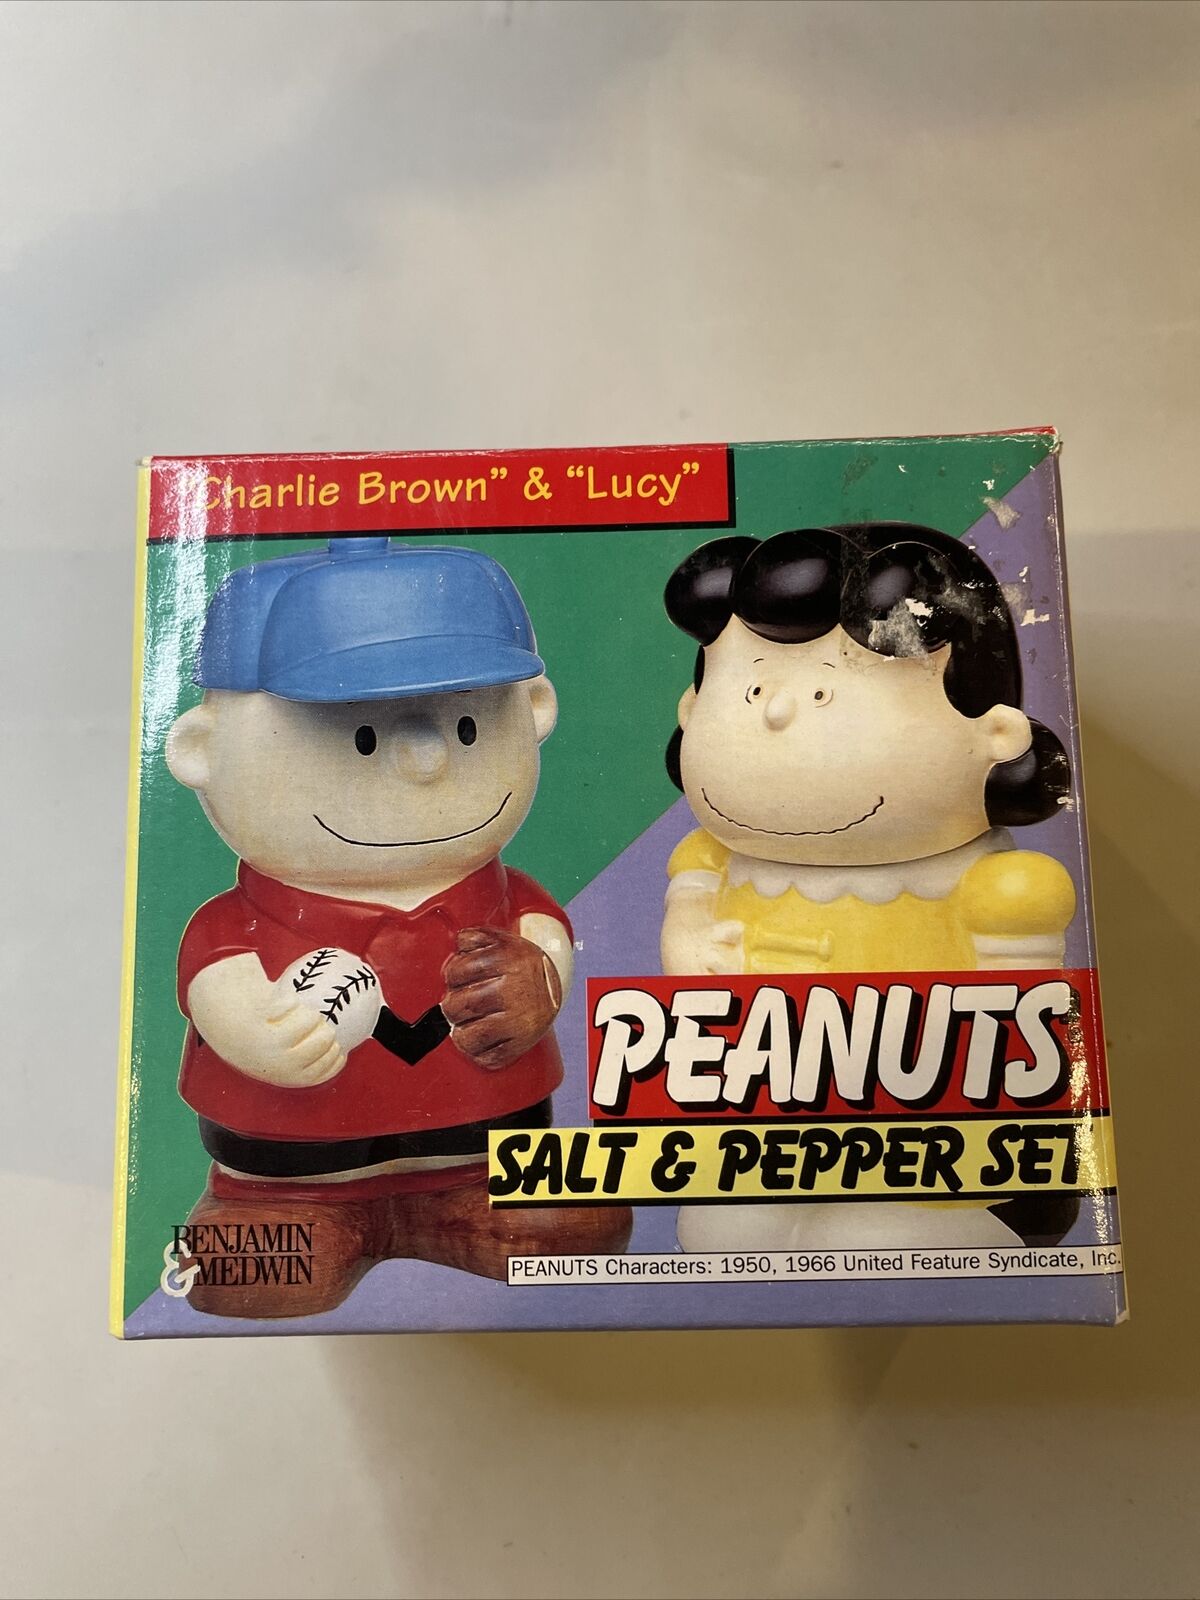 Vintage Benjamin & Medwin Peanuts Charlie Brown & Lucy Salt And Pepper Shakers